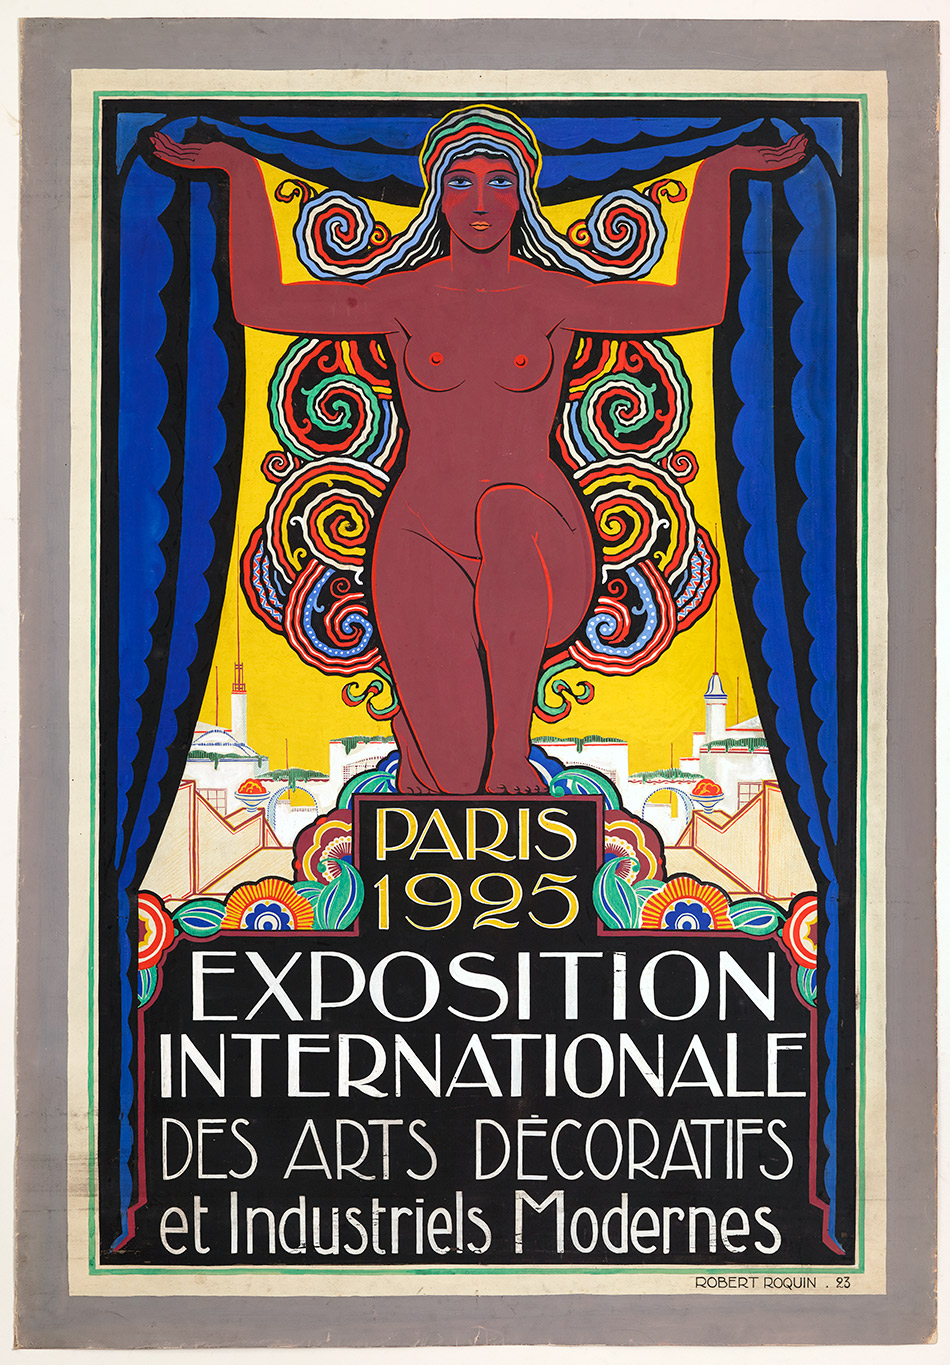 robert-roquin_-poster-paris-1925-exposition-internationale-des-arts-decoratifs-et-industrieles-modernesXX2017